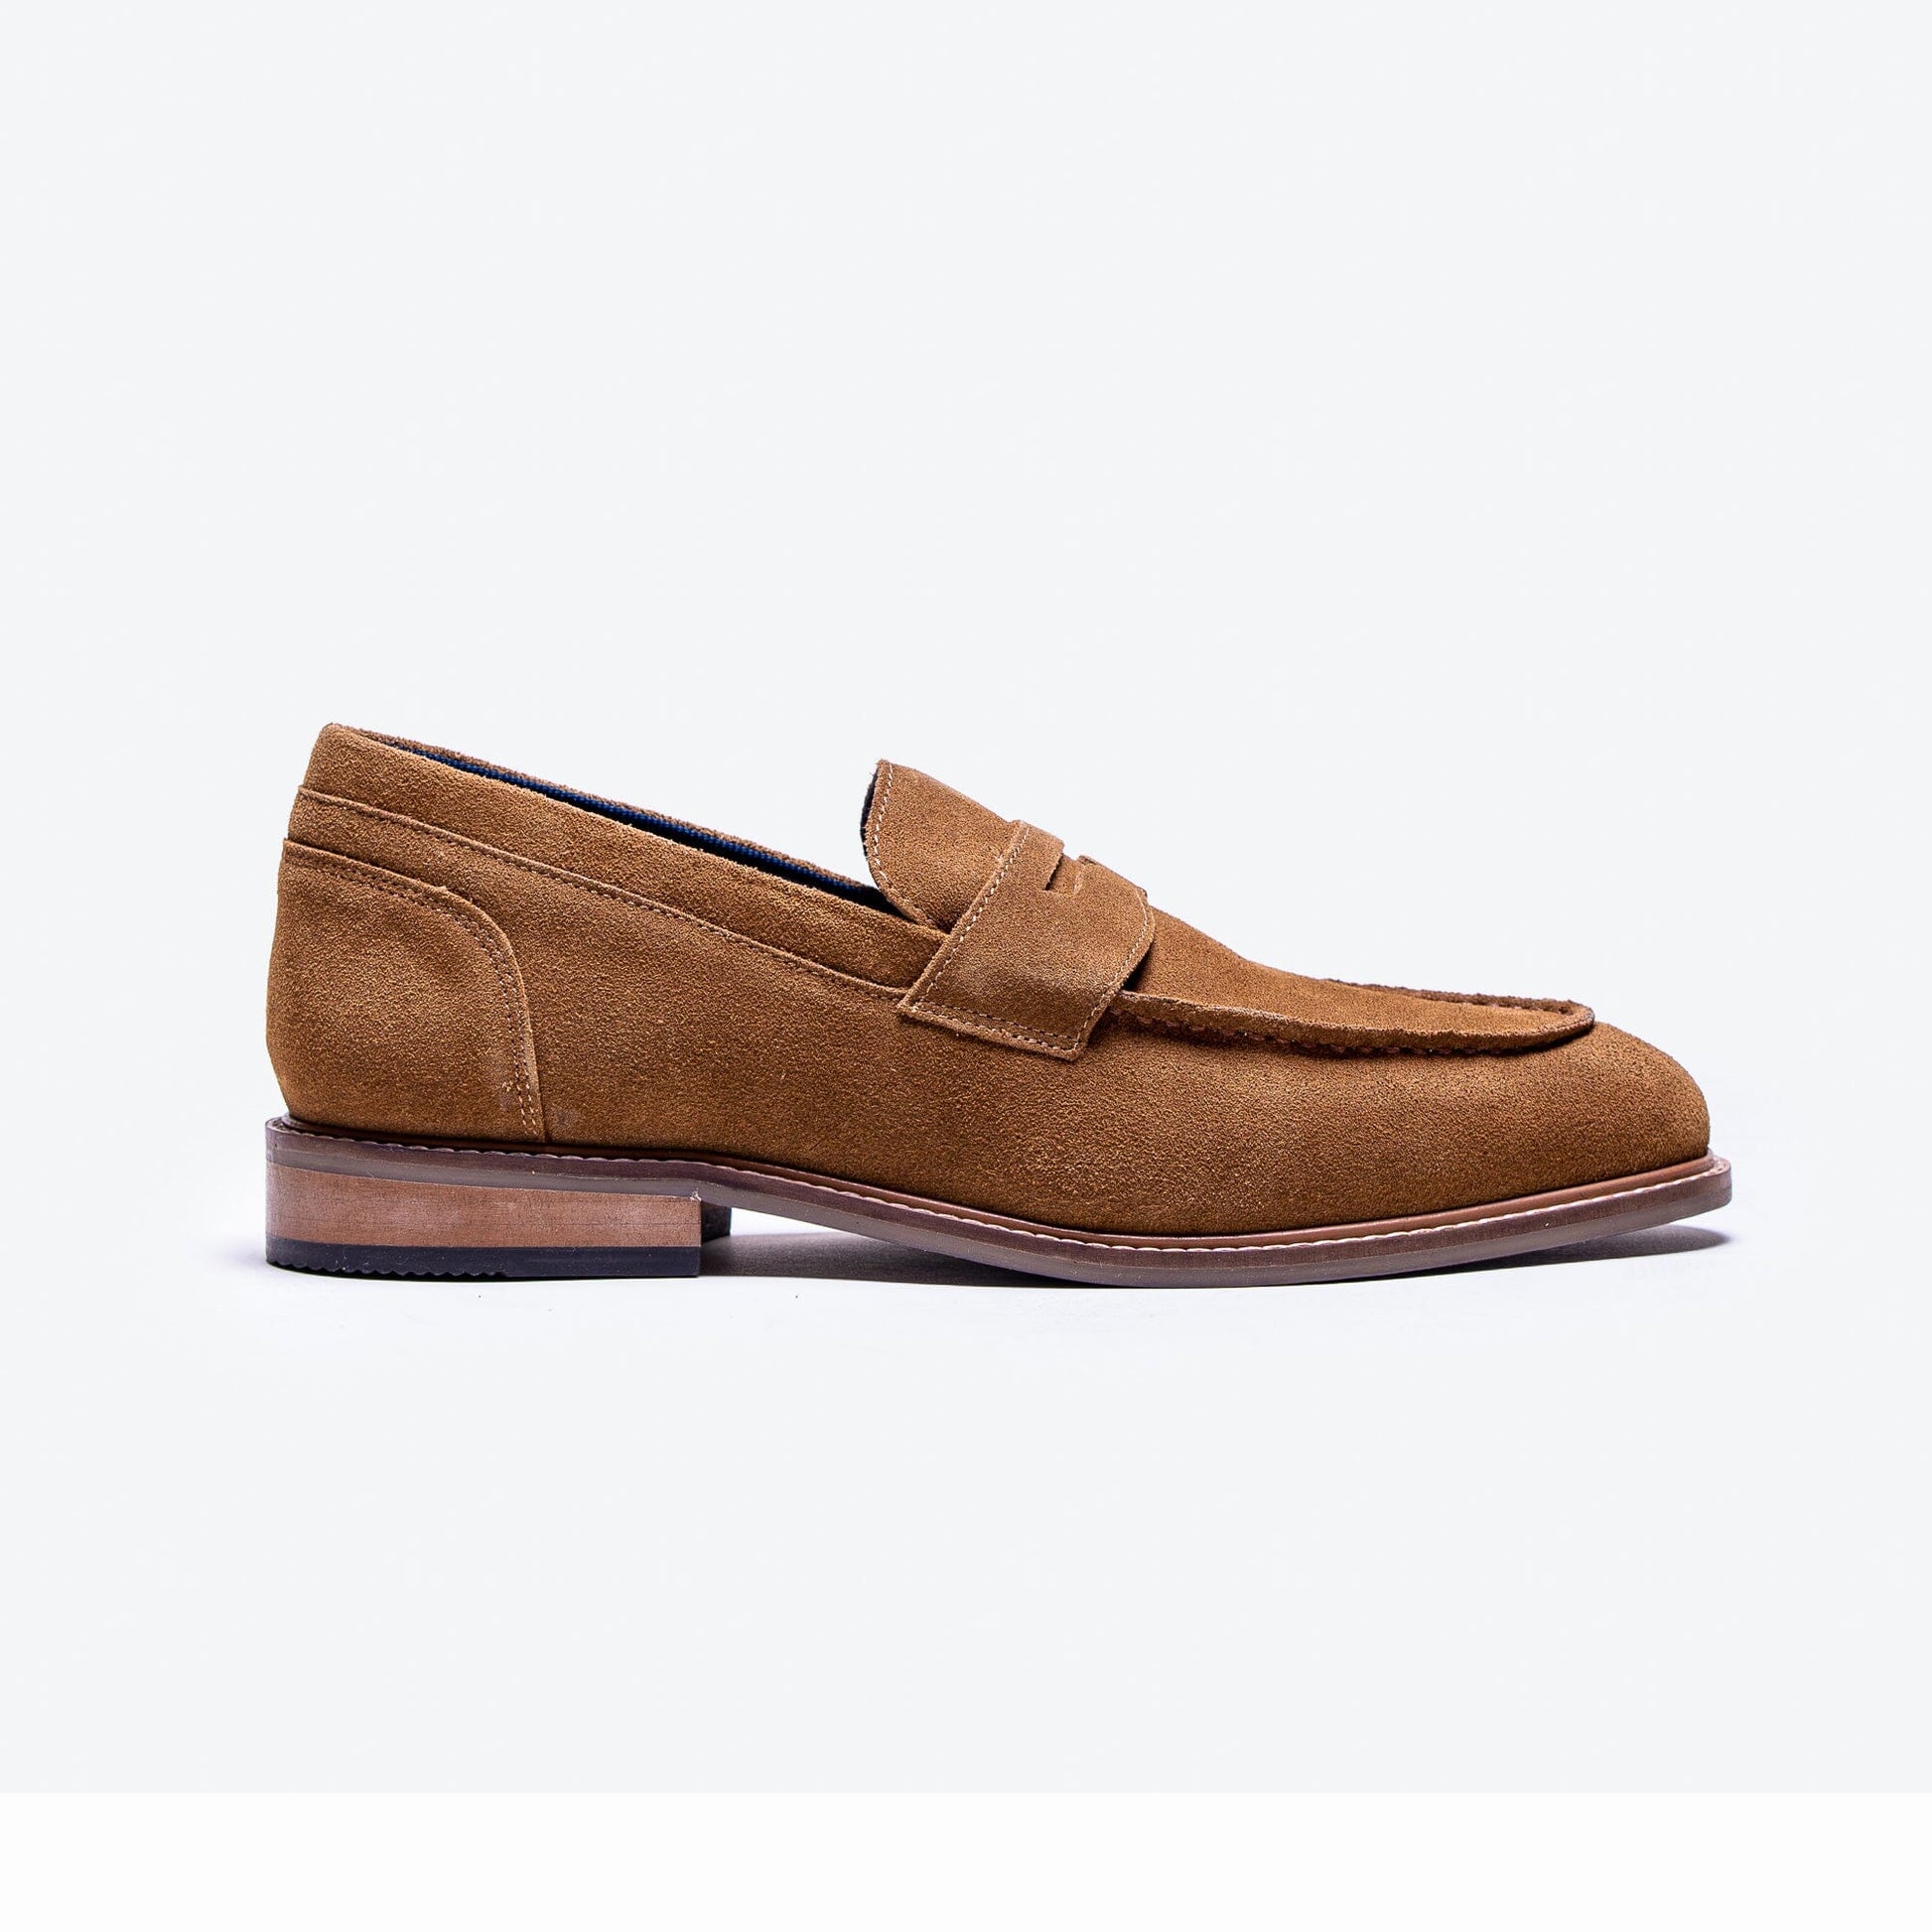 Jordan Tan Suede Loafers - Shoes - 7 - THREADPEPPER